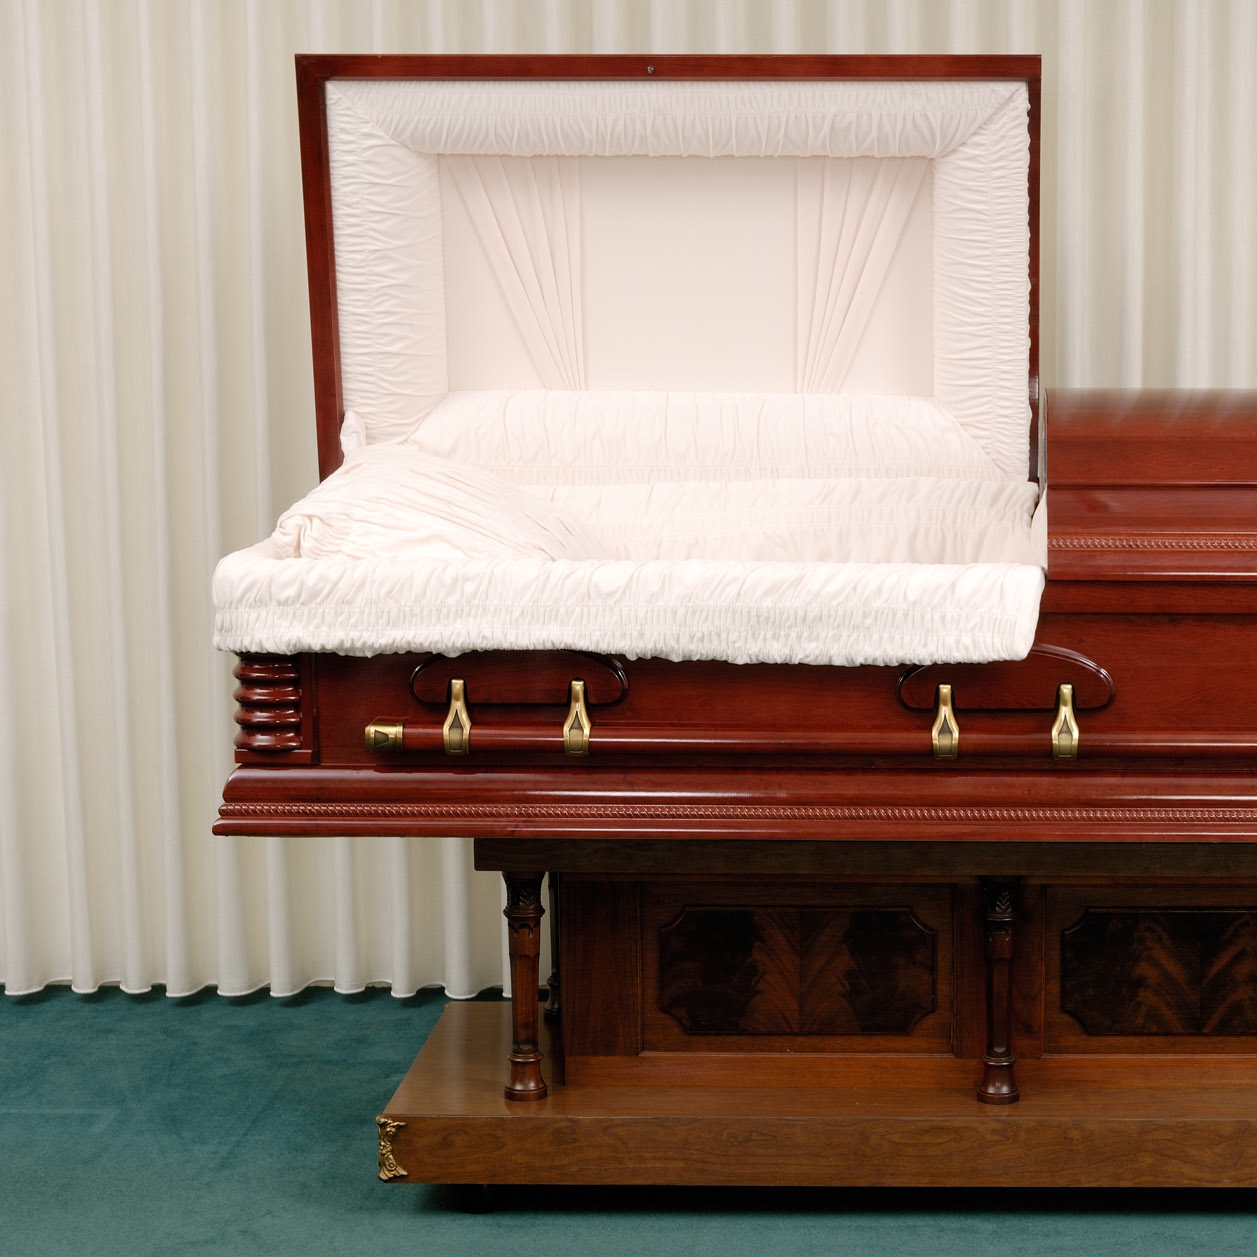 Funeral Parlor. Во сне приснился гроб